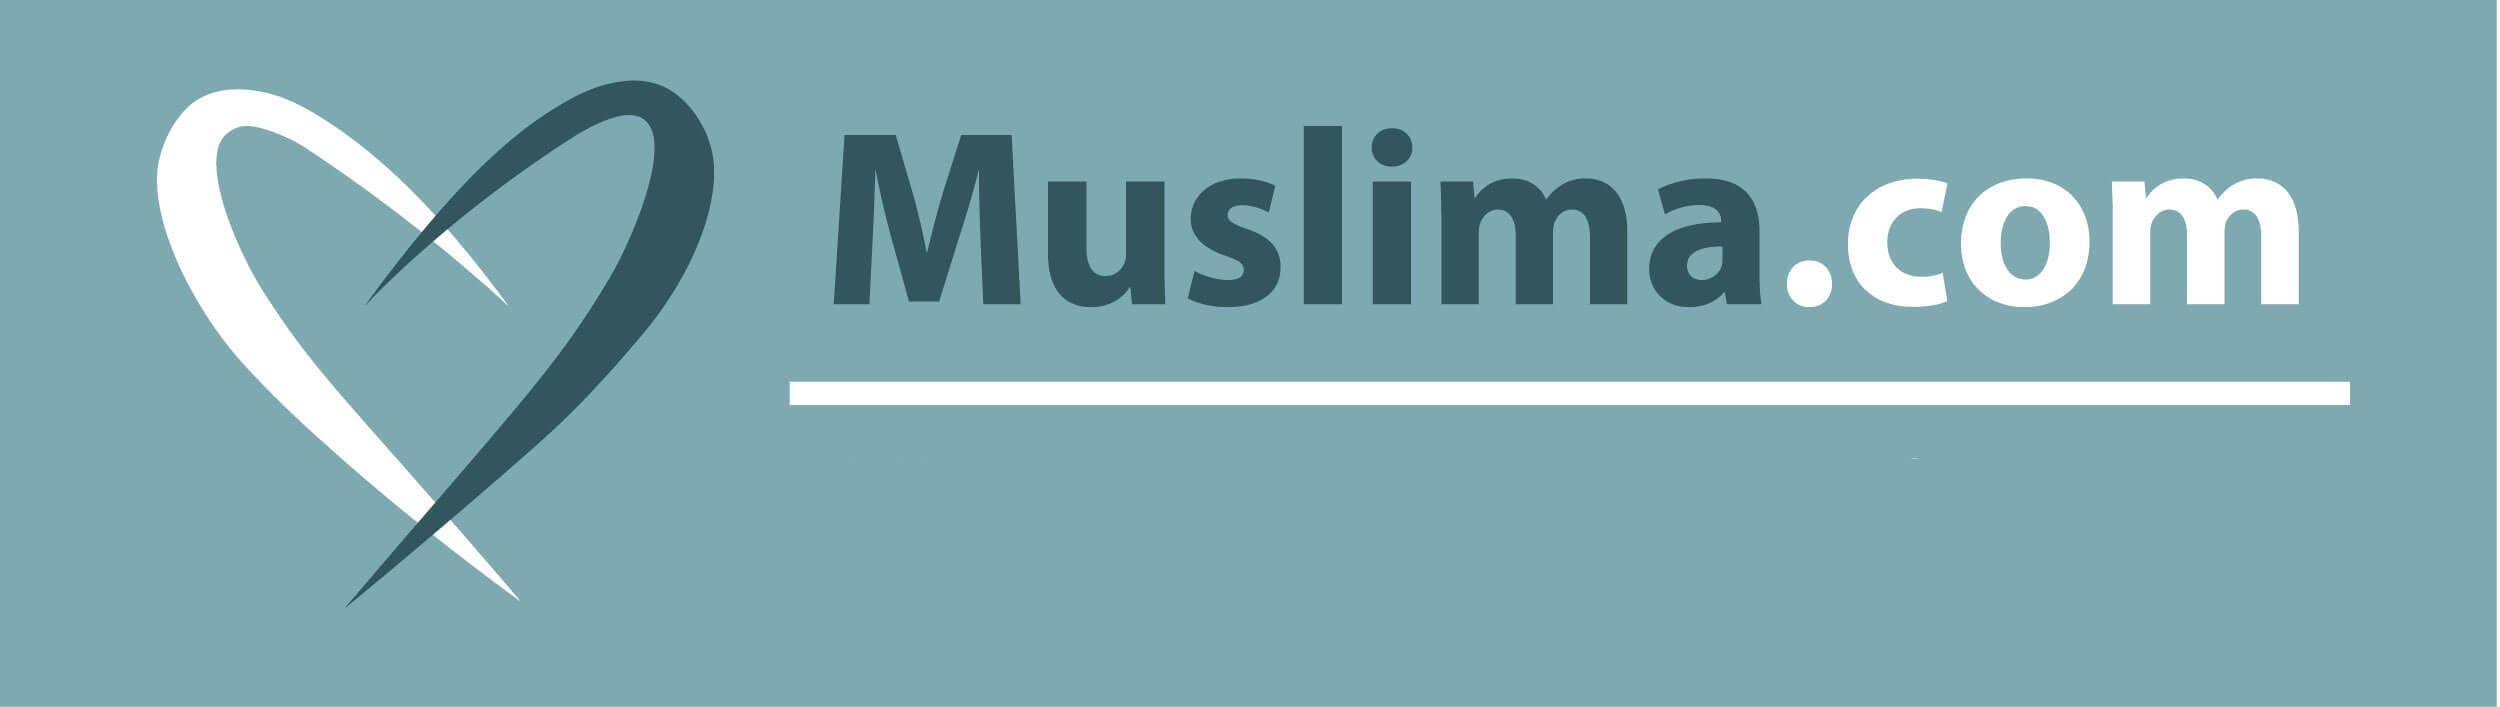 Muslima com login